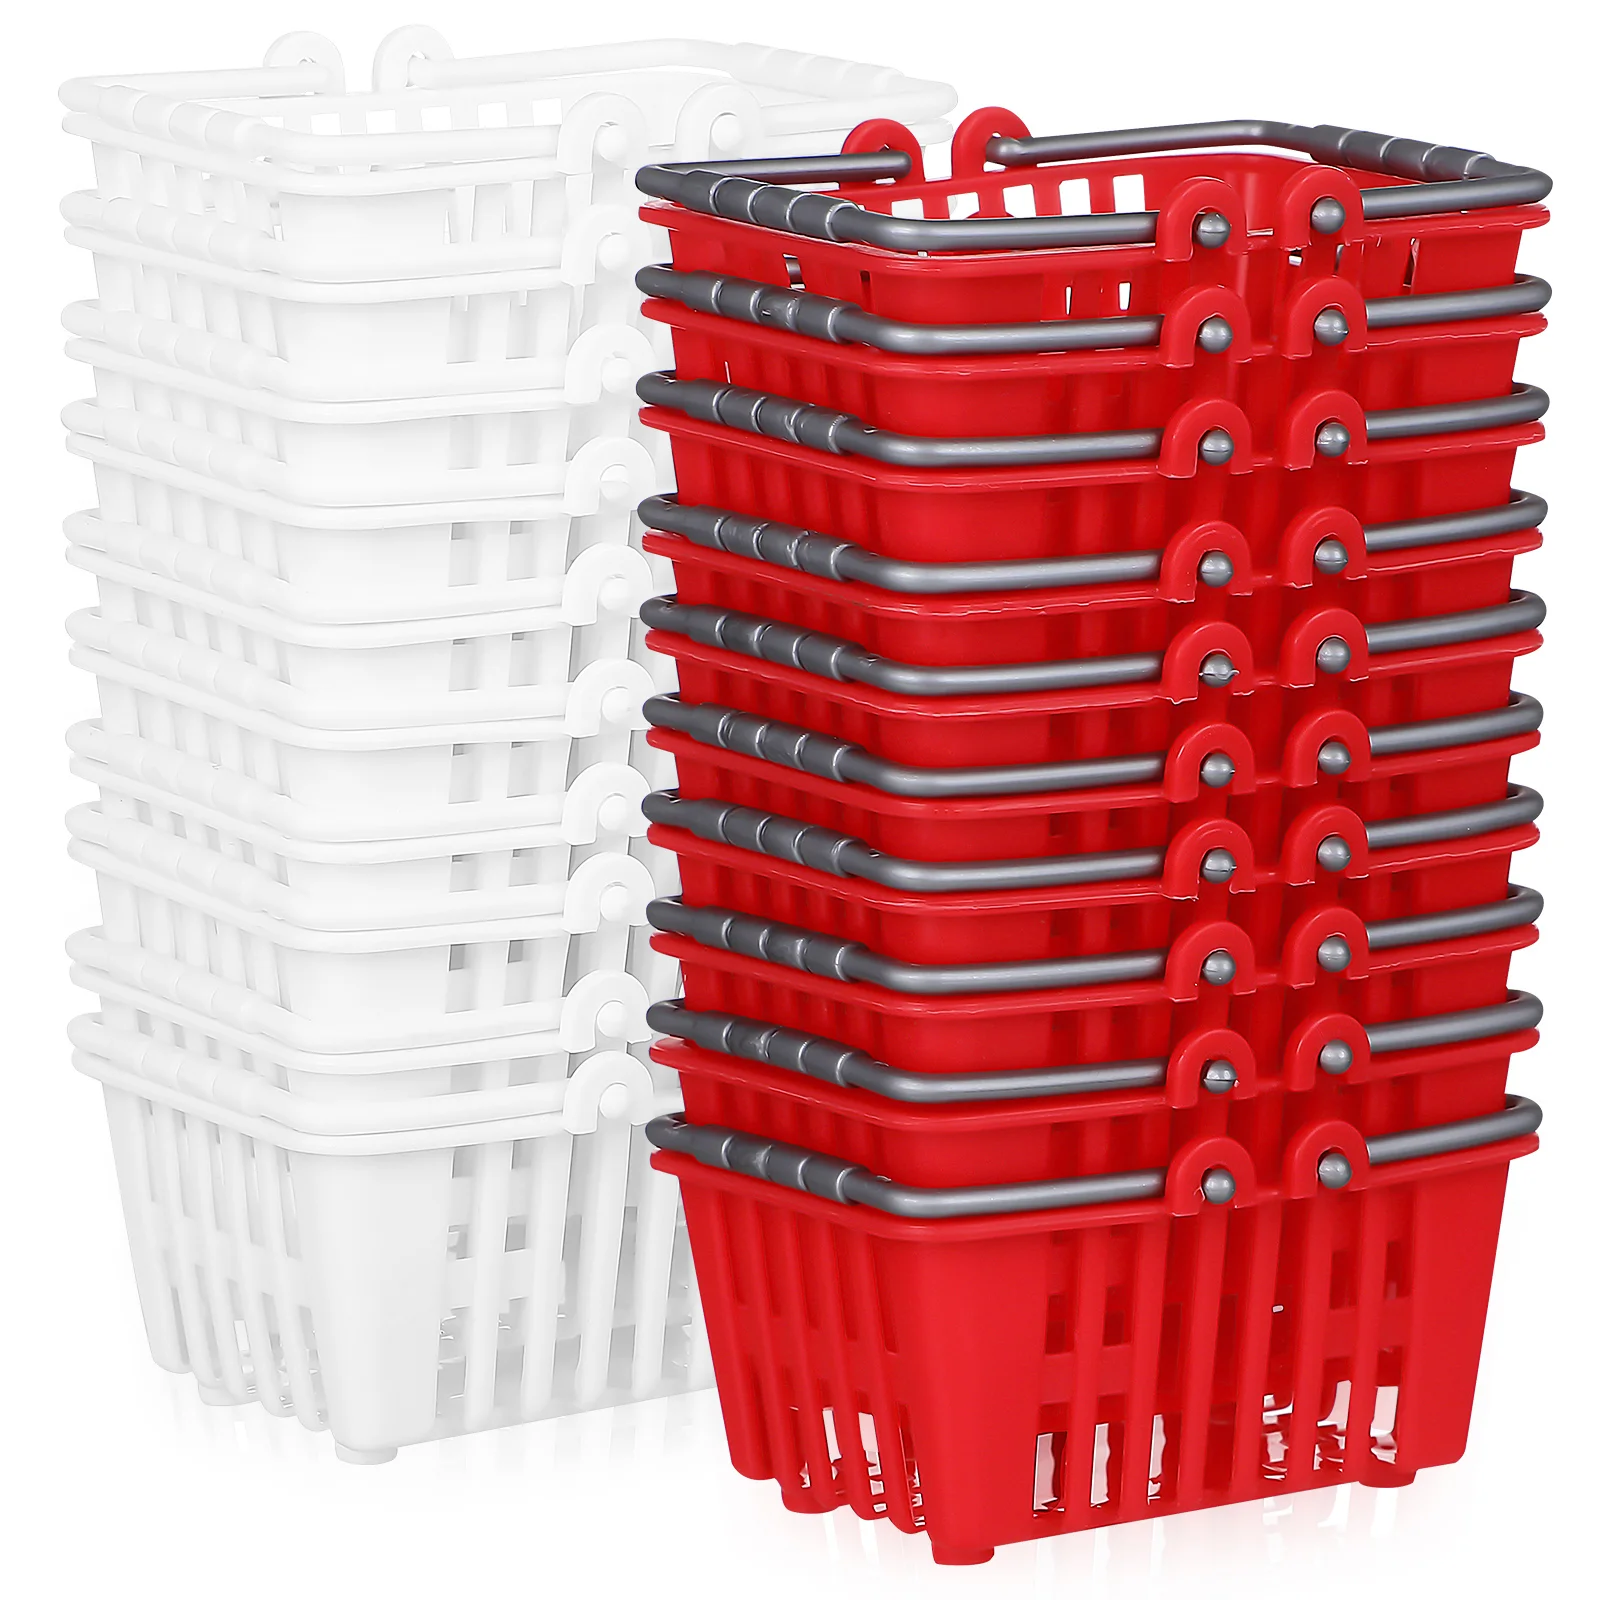 

20 Pcs Simulation Mini Shopping Miniature House Supply Folding Cart Ornament Baskets Model Small Home Accessories Decor Food